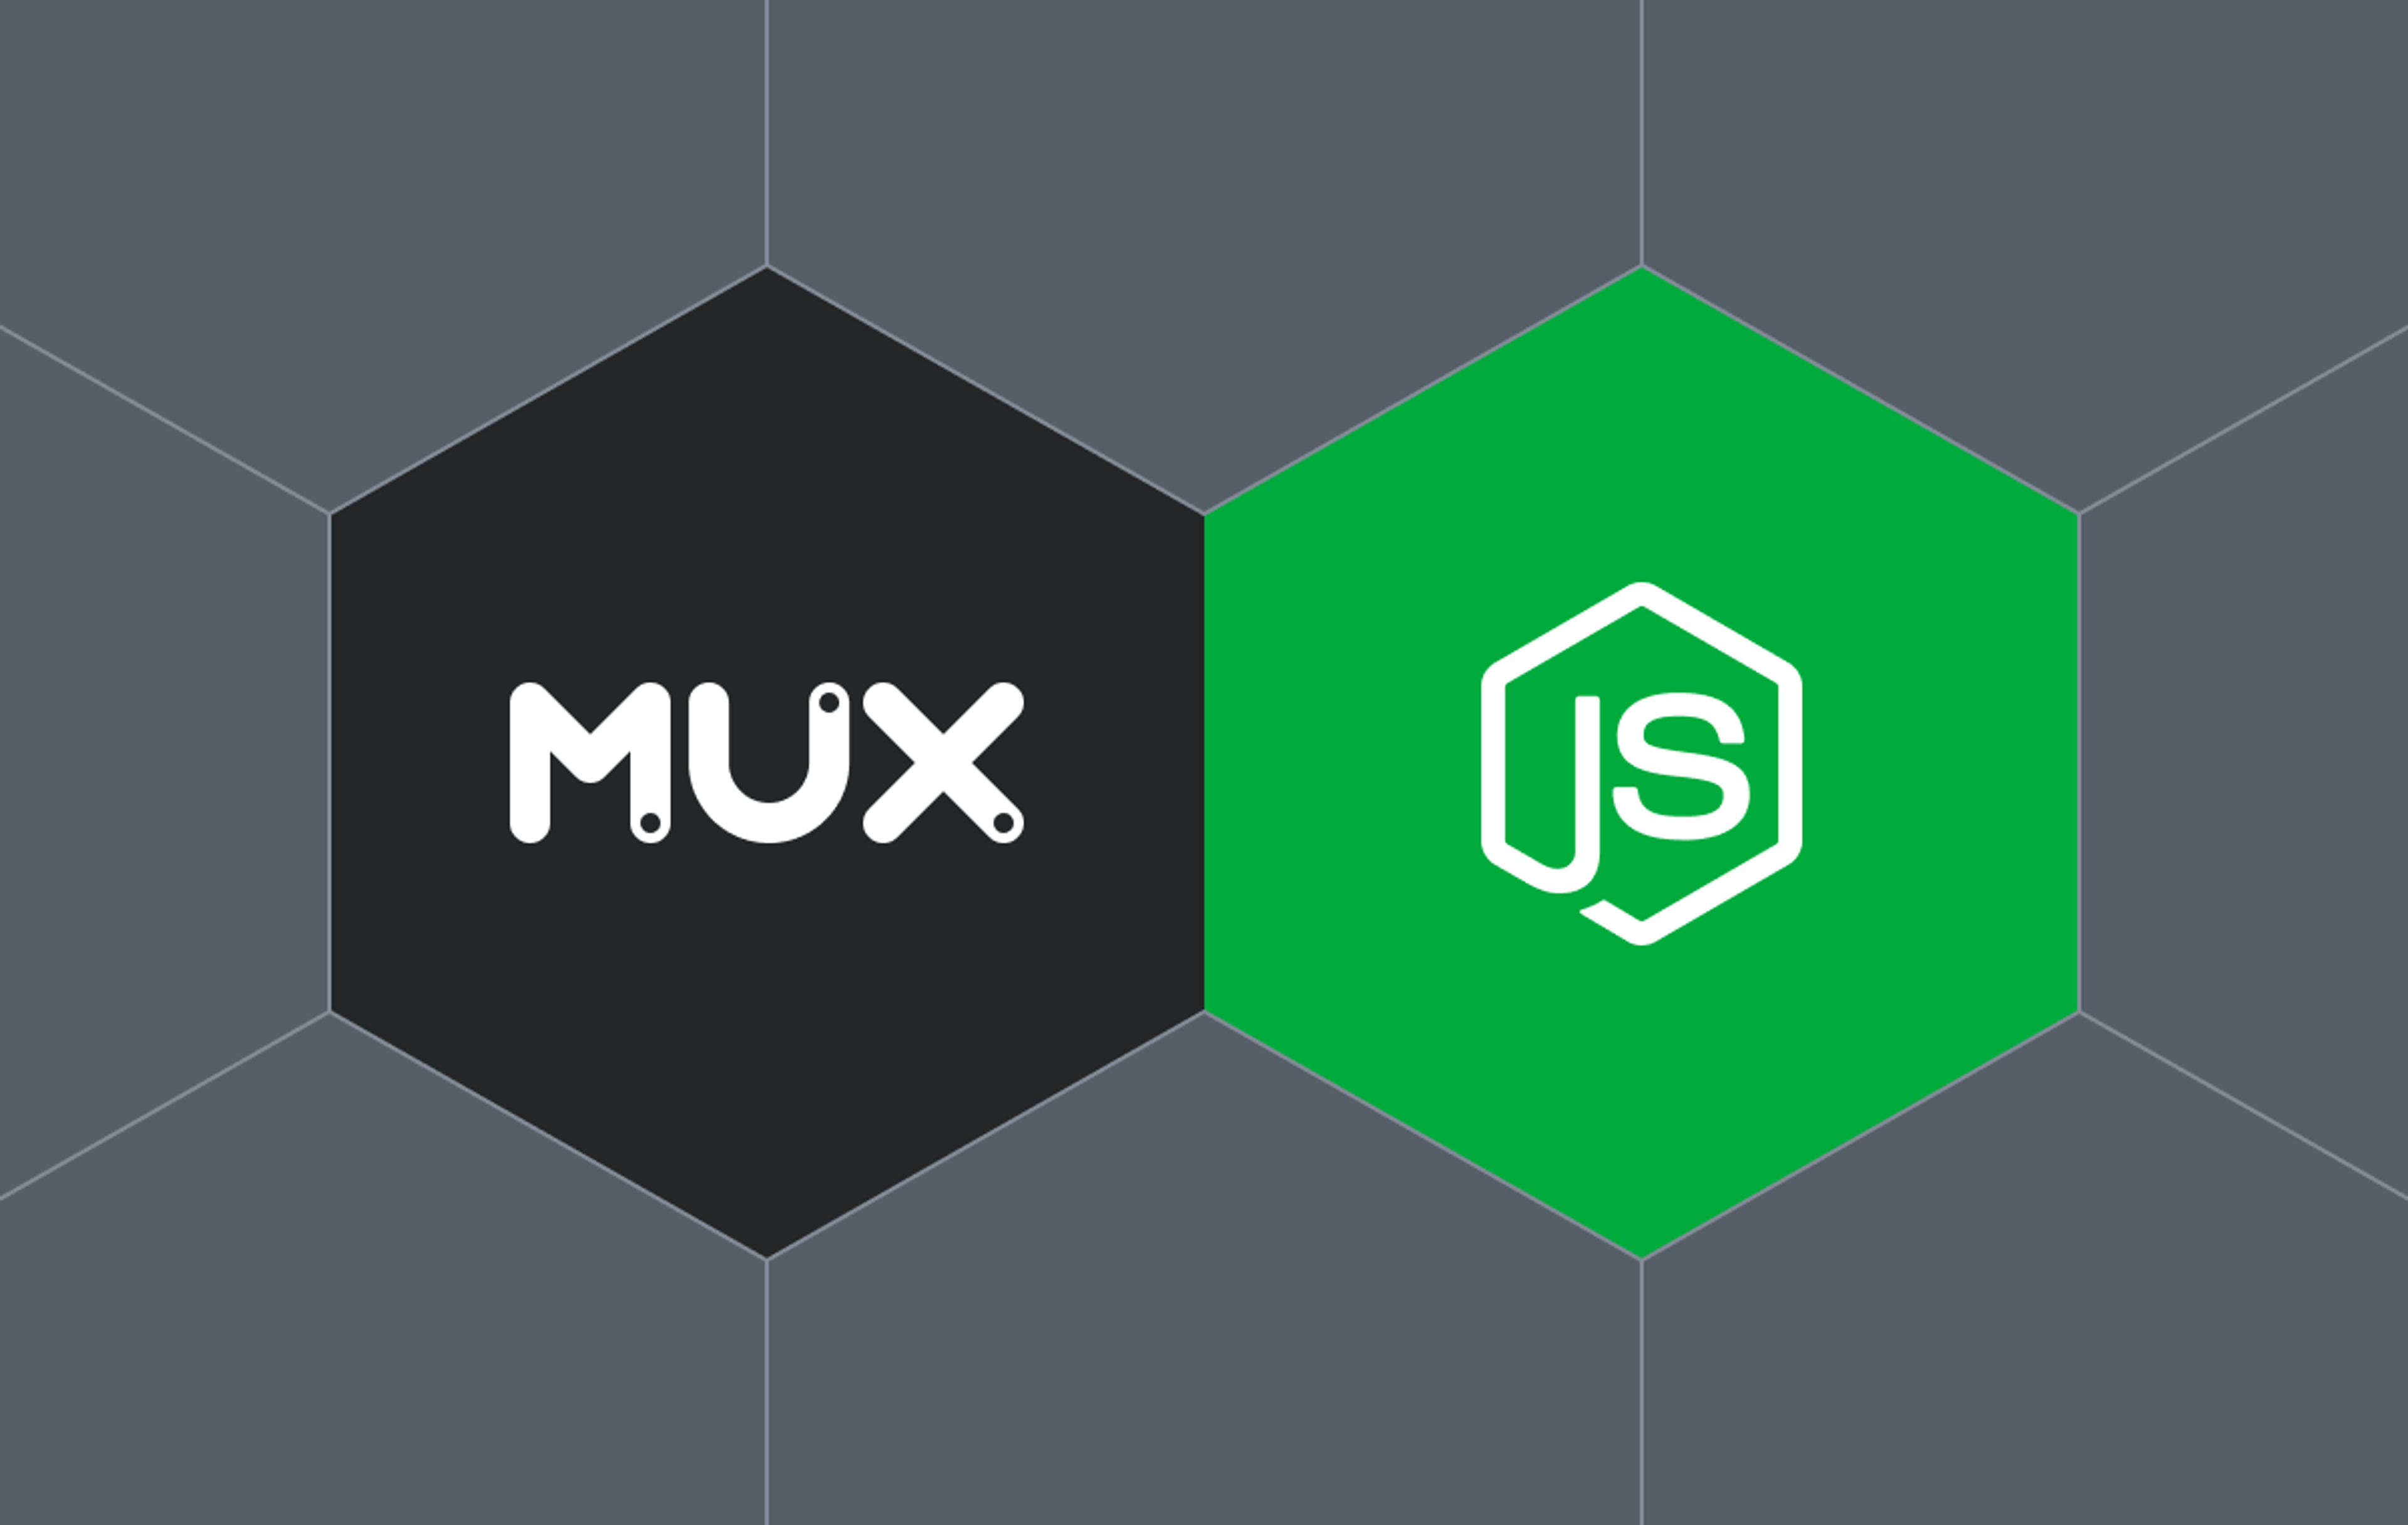 Mux logo with Javascript logo